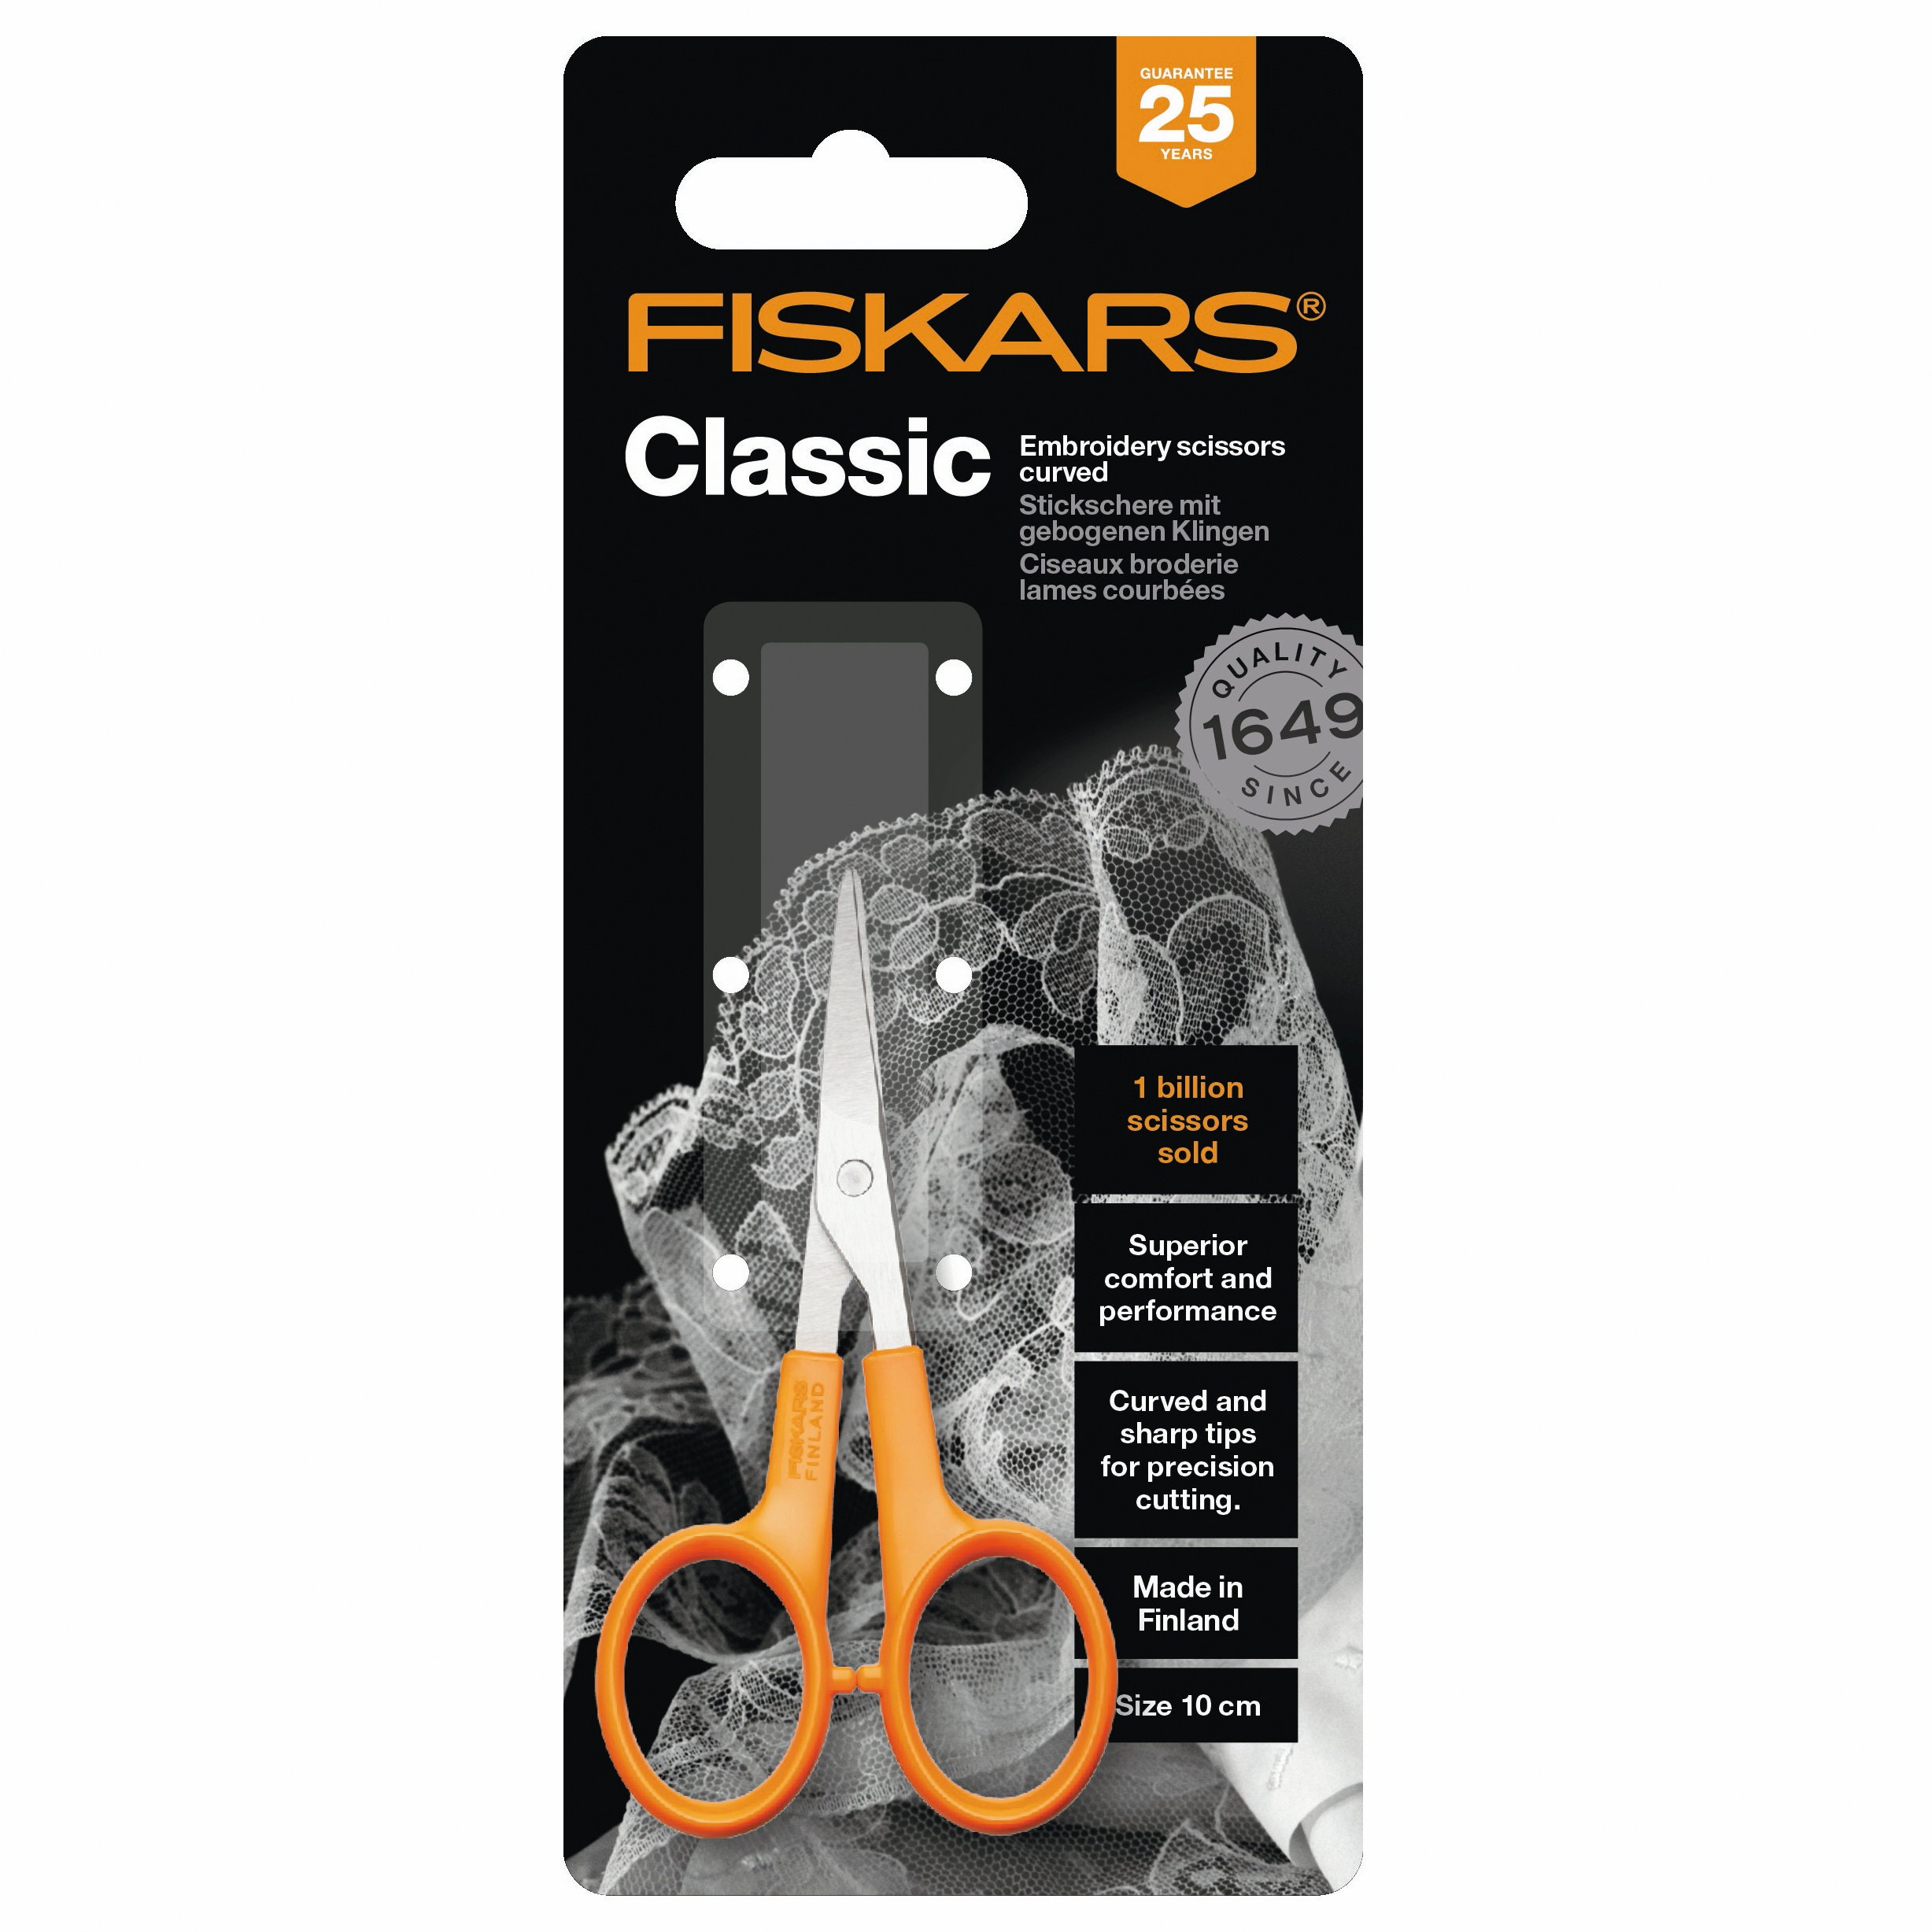 Fiskars Craft Curved 4 Scissors